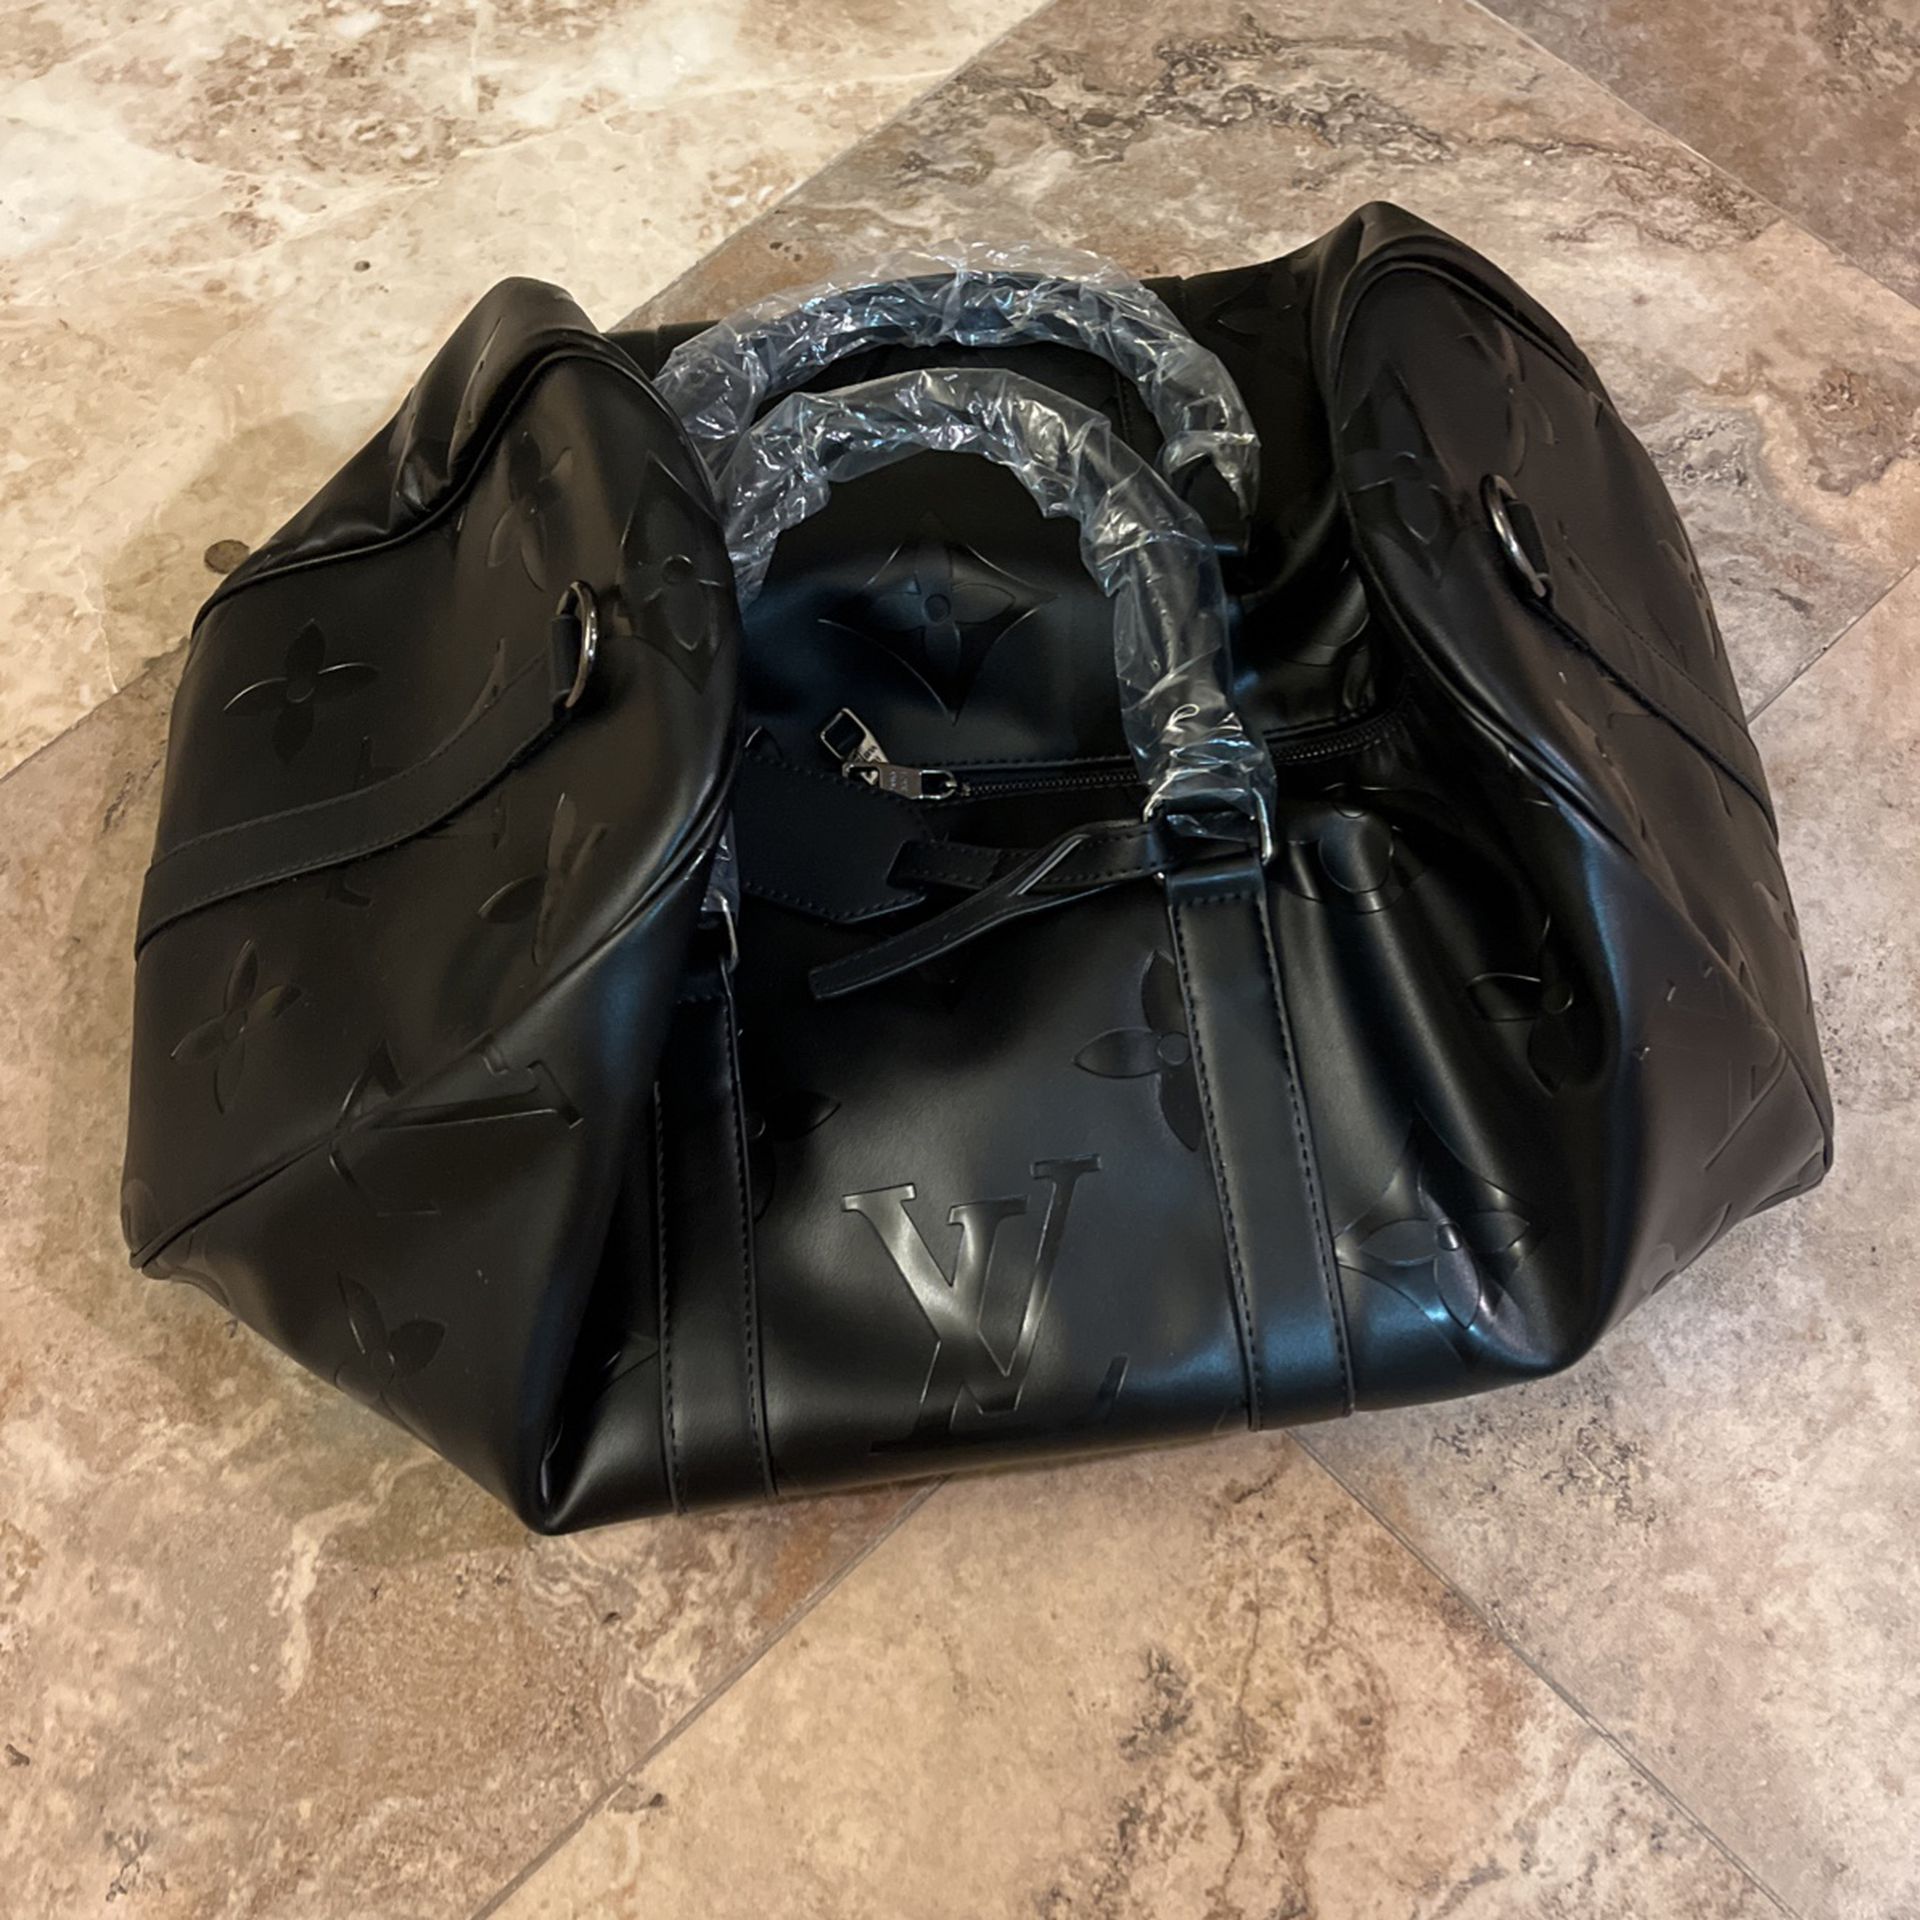 LV Travel Bag - Black Large for Sale in San Dimas, CA - OfferUp